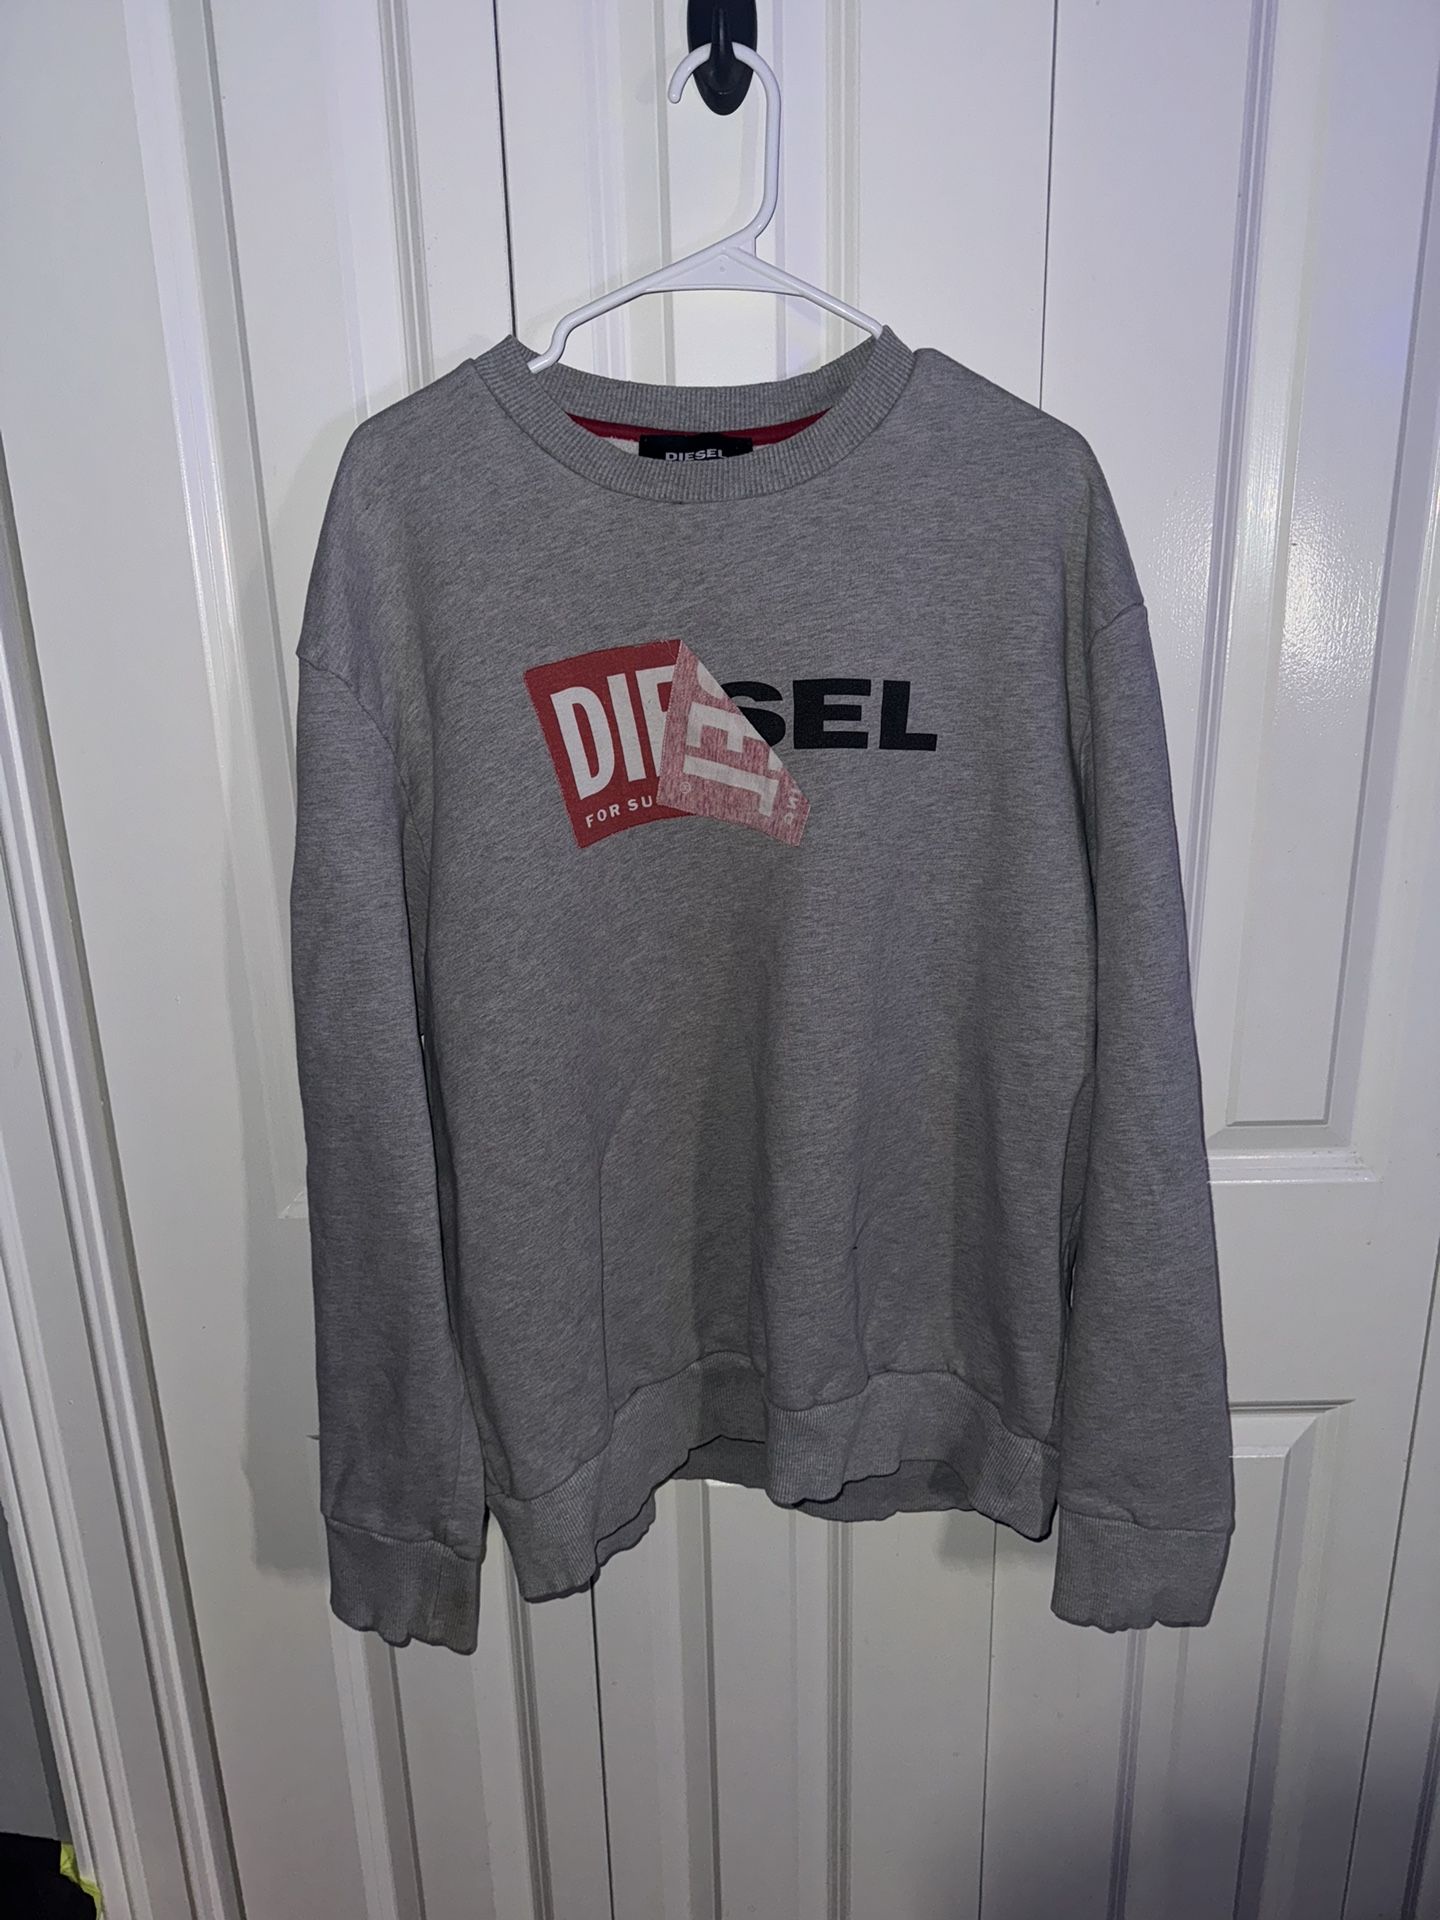 Men’s Diesel Crewneck Sweatshirt Size L Grey Red Peel Off Label Rare